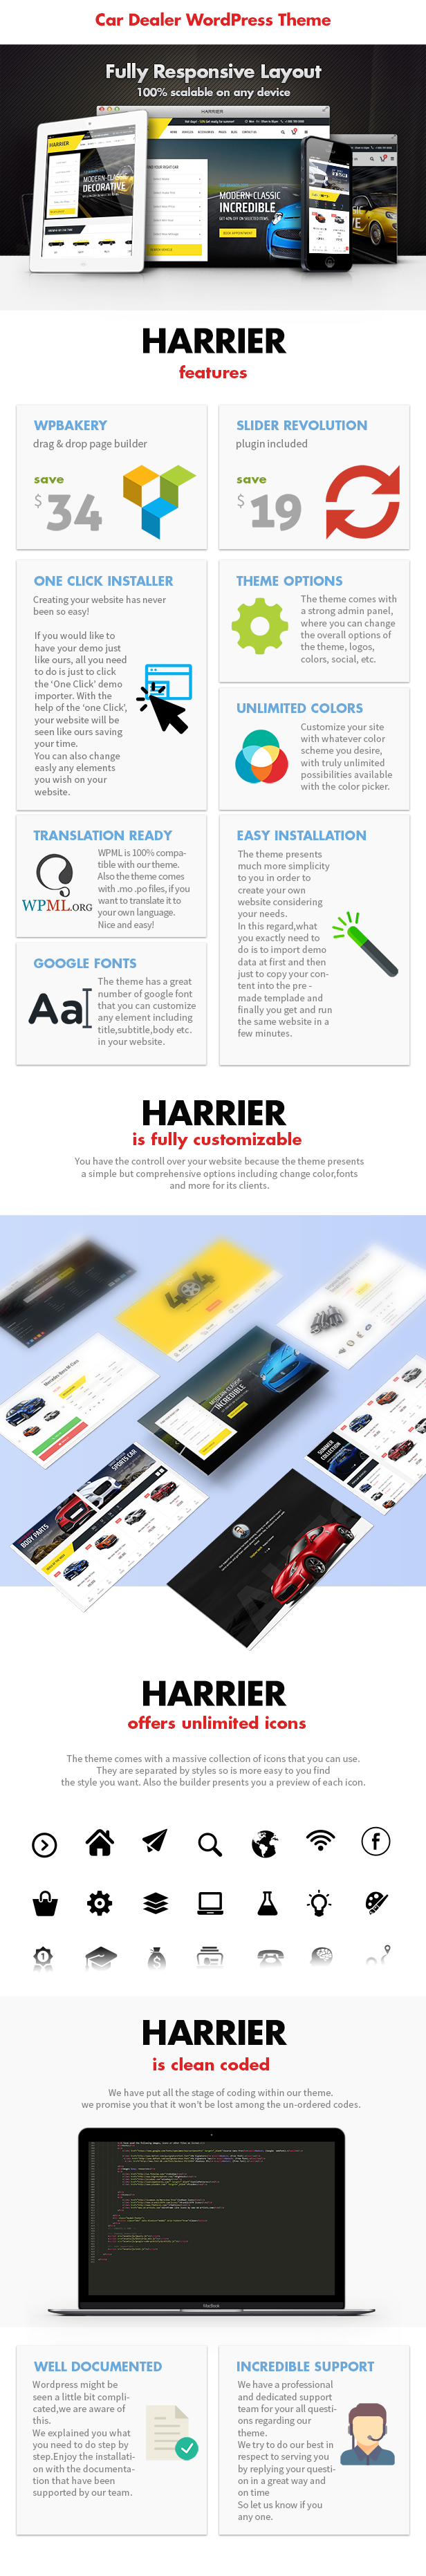 Harrier - Car Dealer and Automotive WordPress Theme - 3